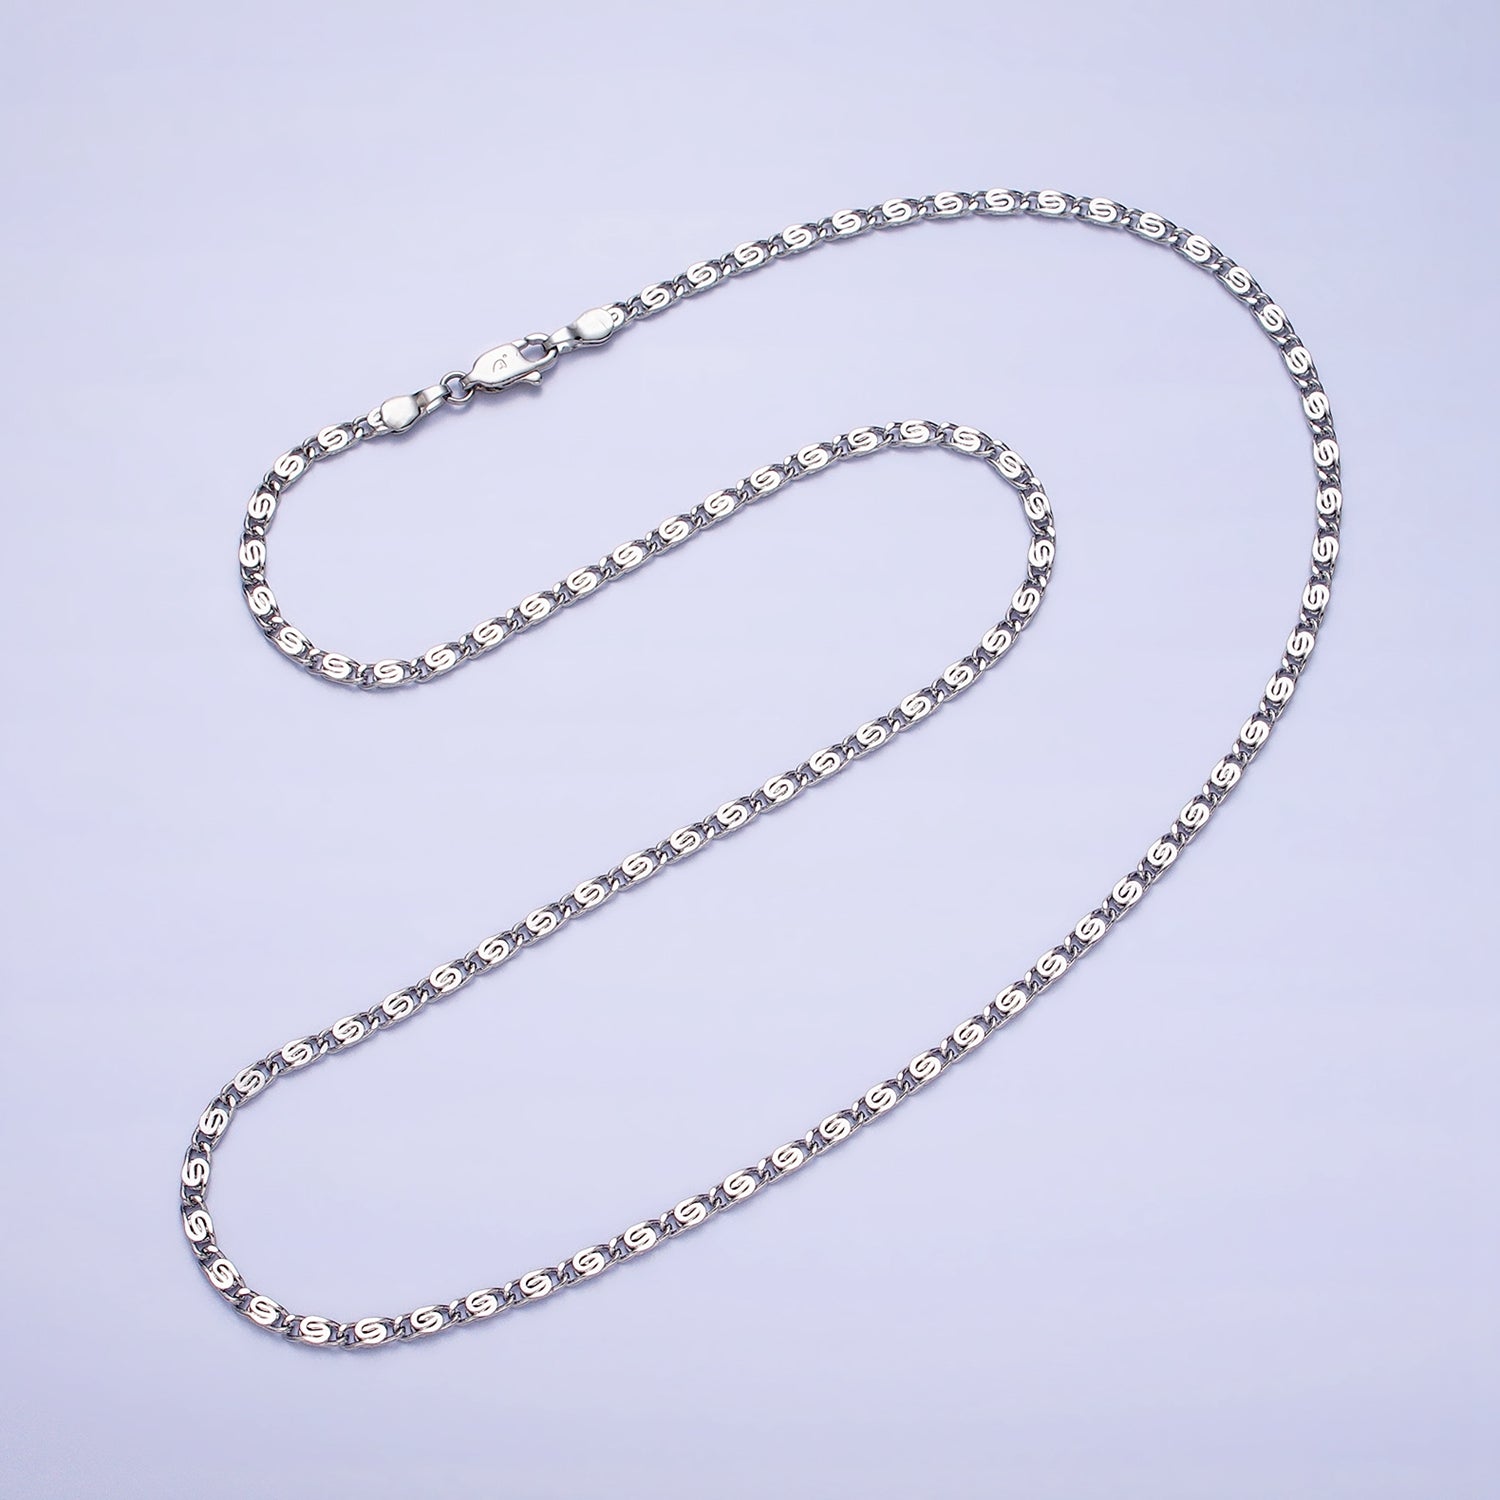 Dainty Scroll Chain - 2.5mm wide Silver Necklace Chain 19.75 inch  WA-1736 WA-1861